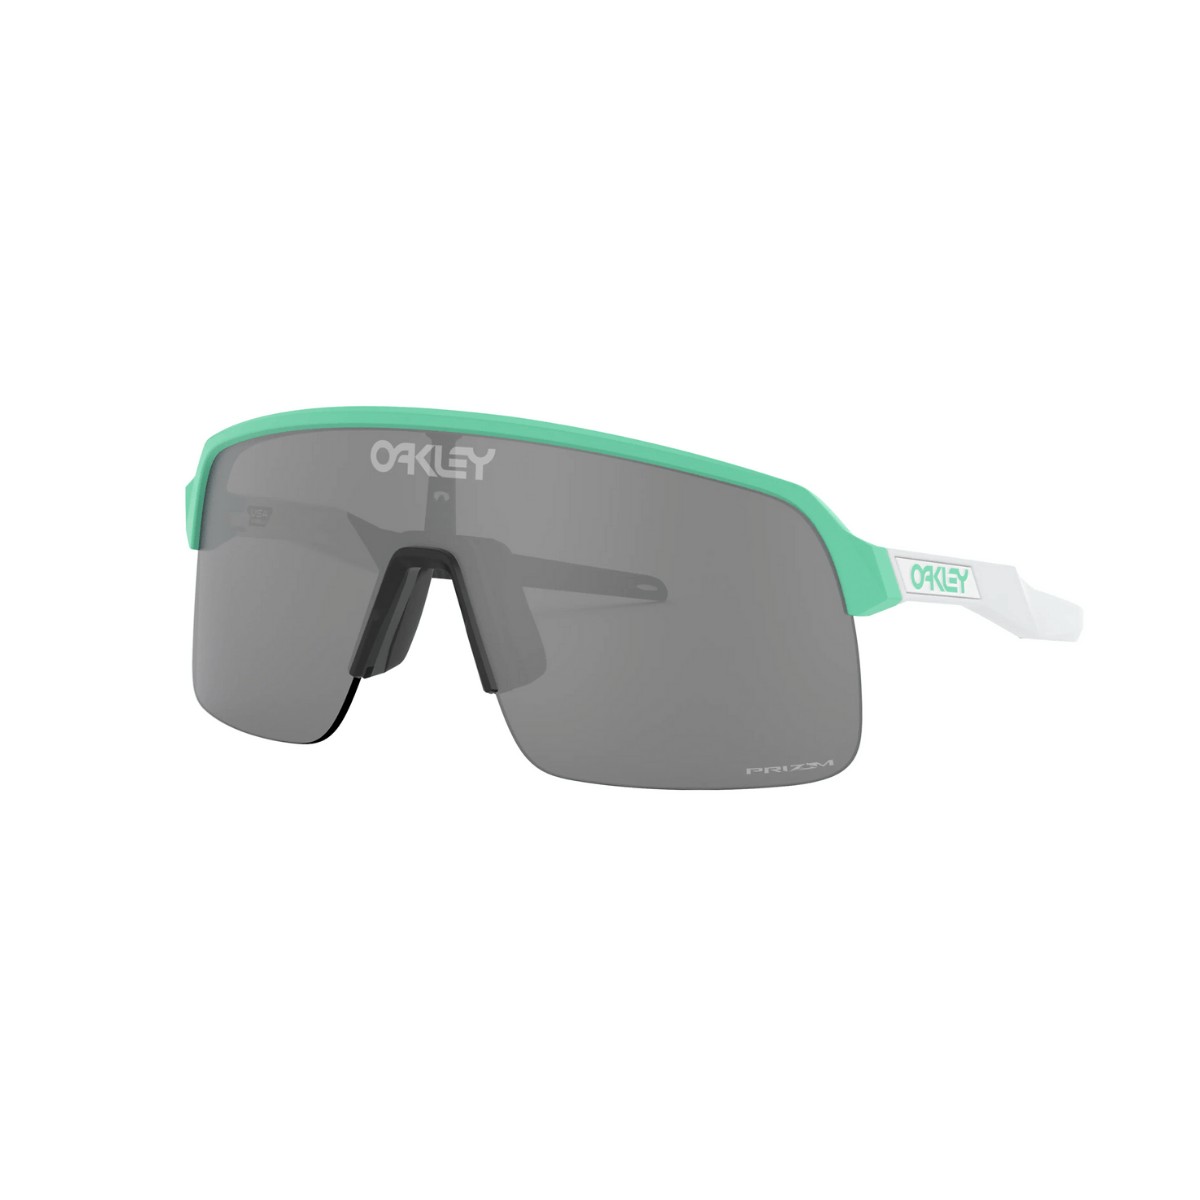 Photos - Sunglasses Oakley Sutro Lite Glasses Black Sky blue white Black Prizm lenses OO9463-0 